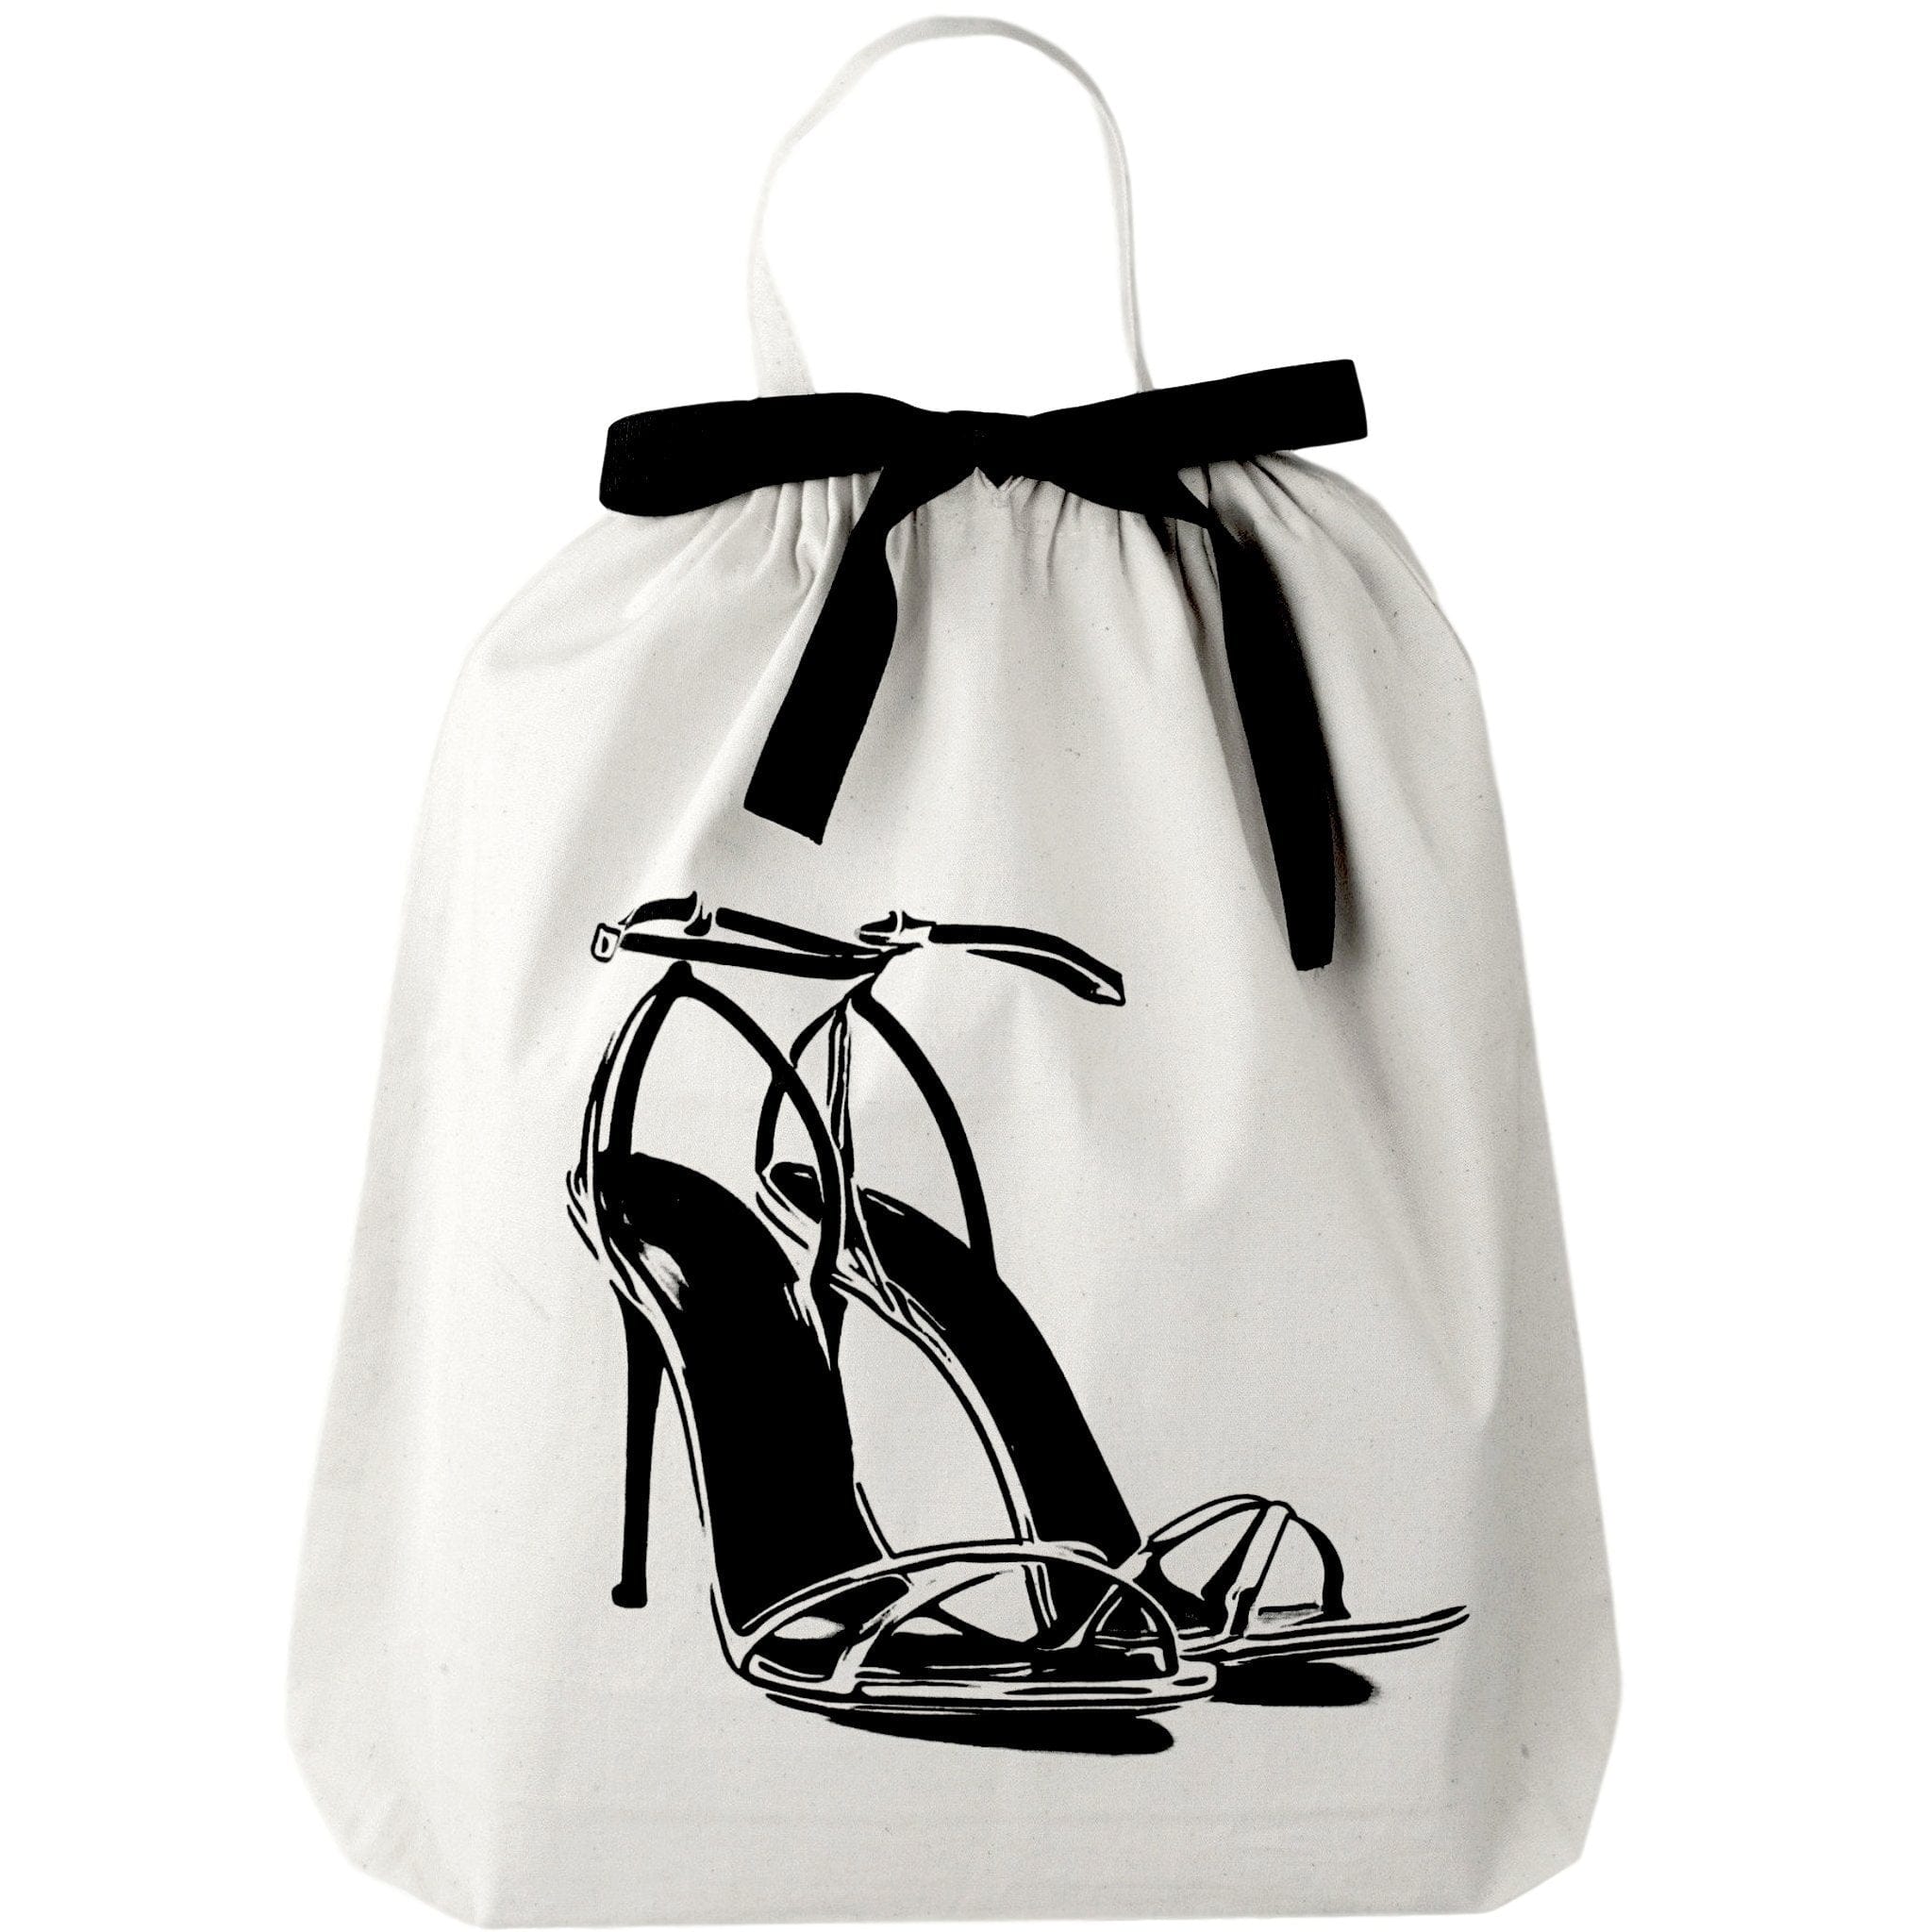 High heel sandal shoe bag Favorite Packing Bags For Her, 3-pack Cream - Deal Gift Set - Bag-all